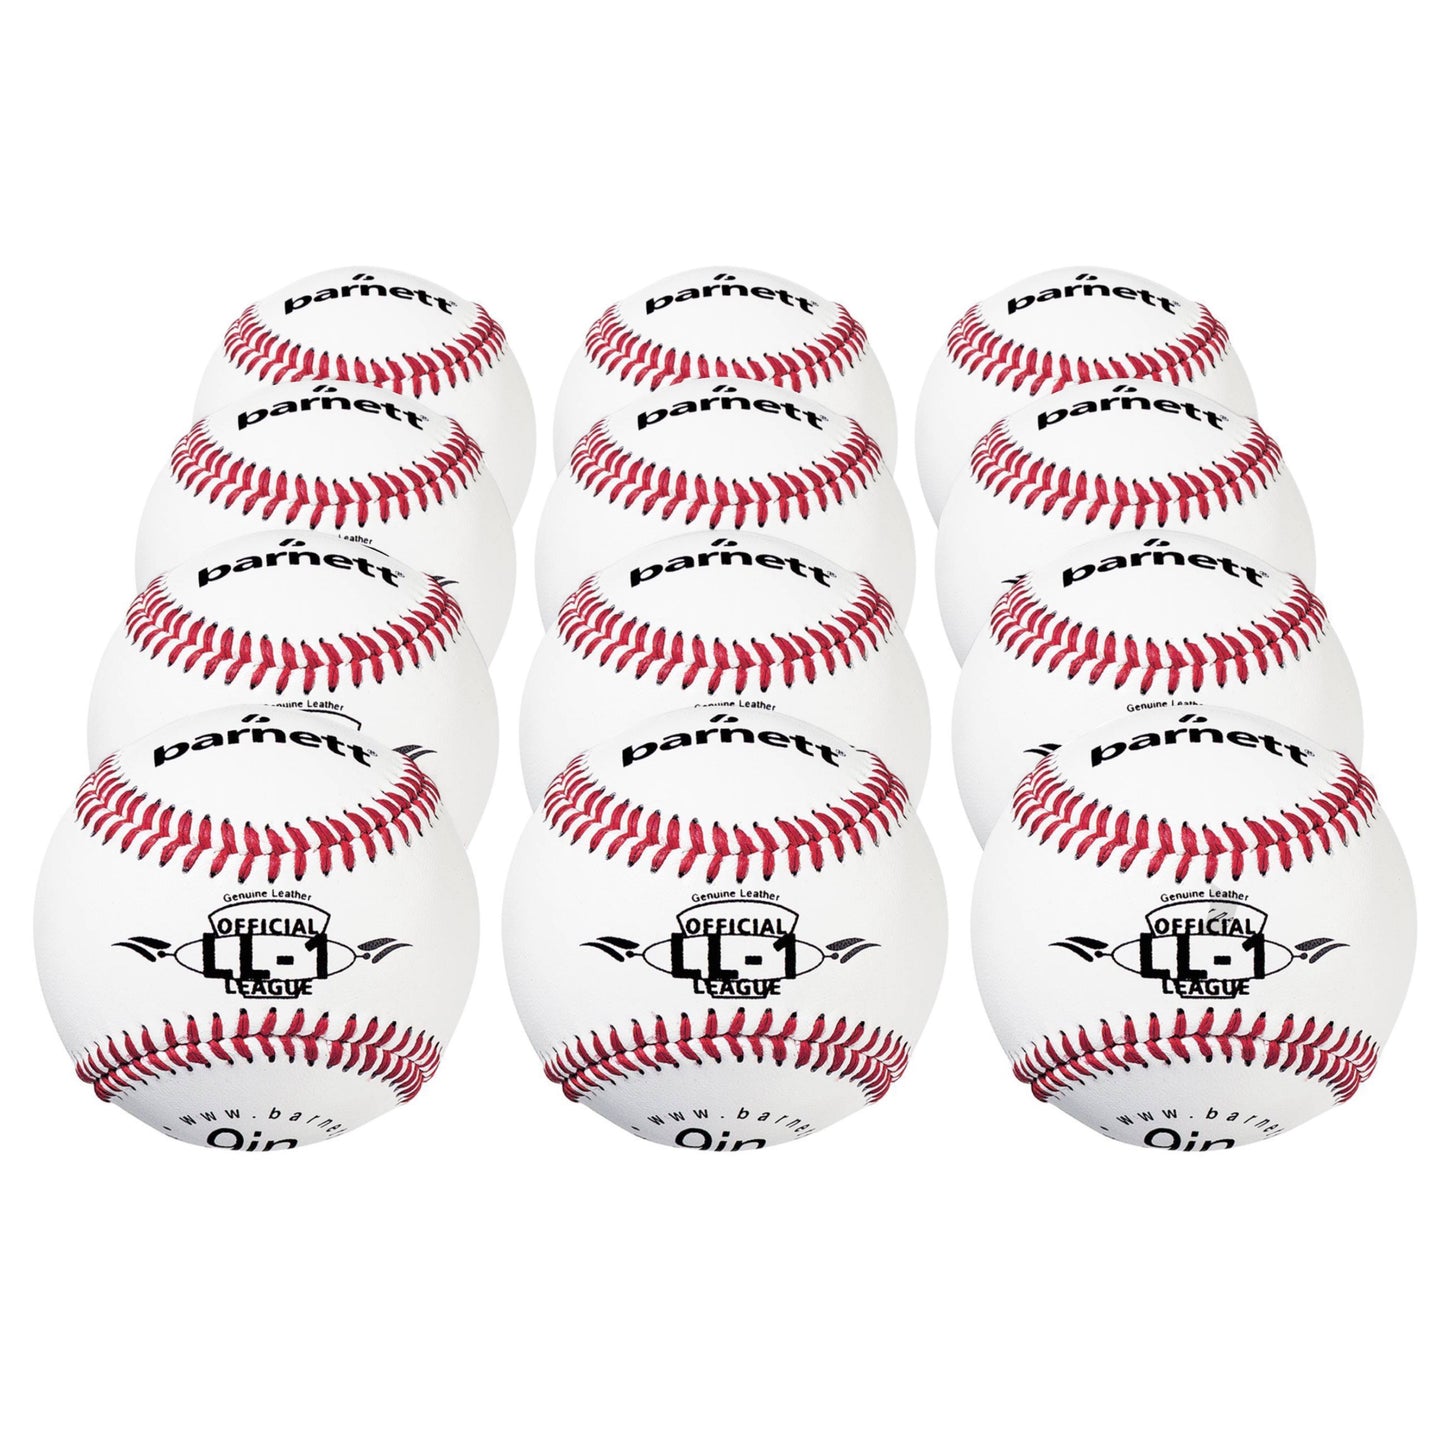 LL-1 Baseball Ball Wettkampf und Training, Grösse 9"(inch), Farbe weiß, 12 Stück (1 Dutzend)